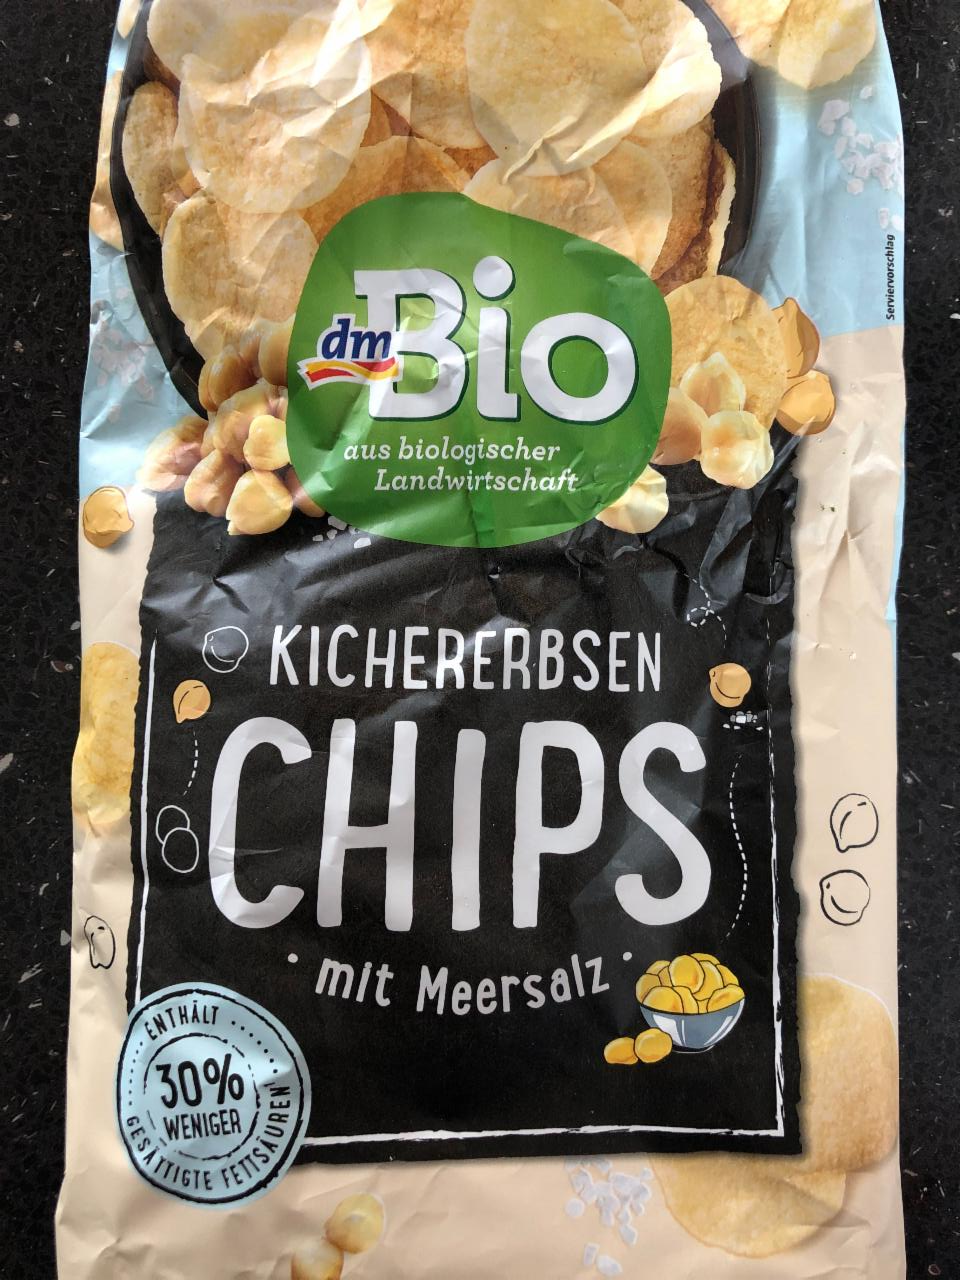 Fotografie - Kichererbsen chips mit Meerzalt DmBio